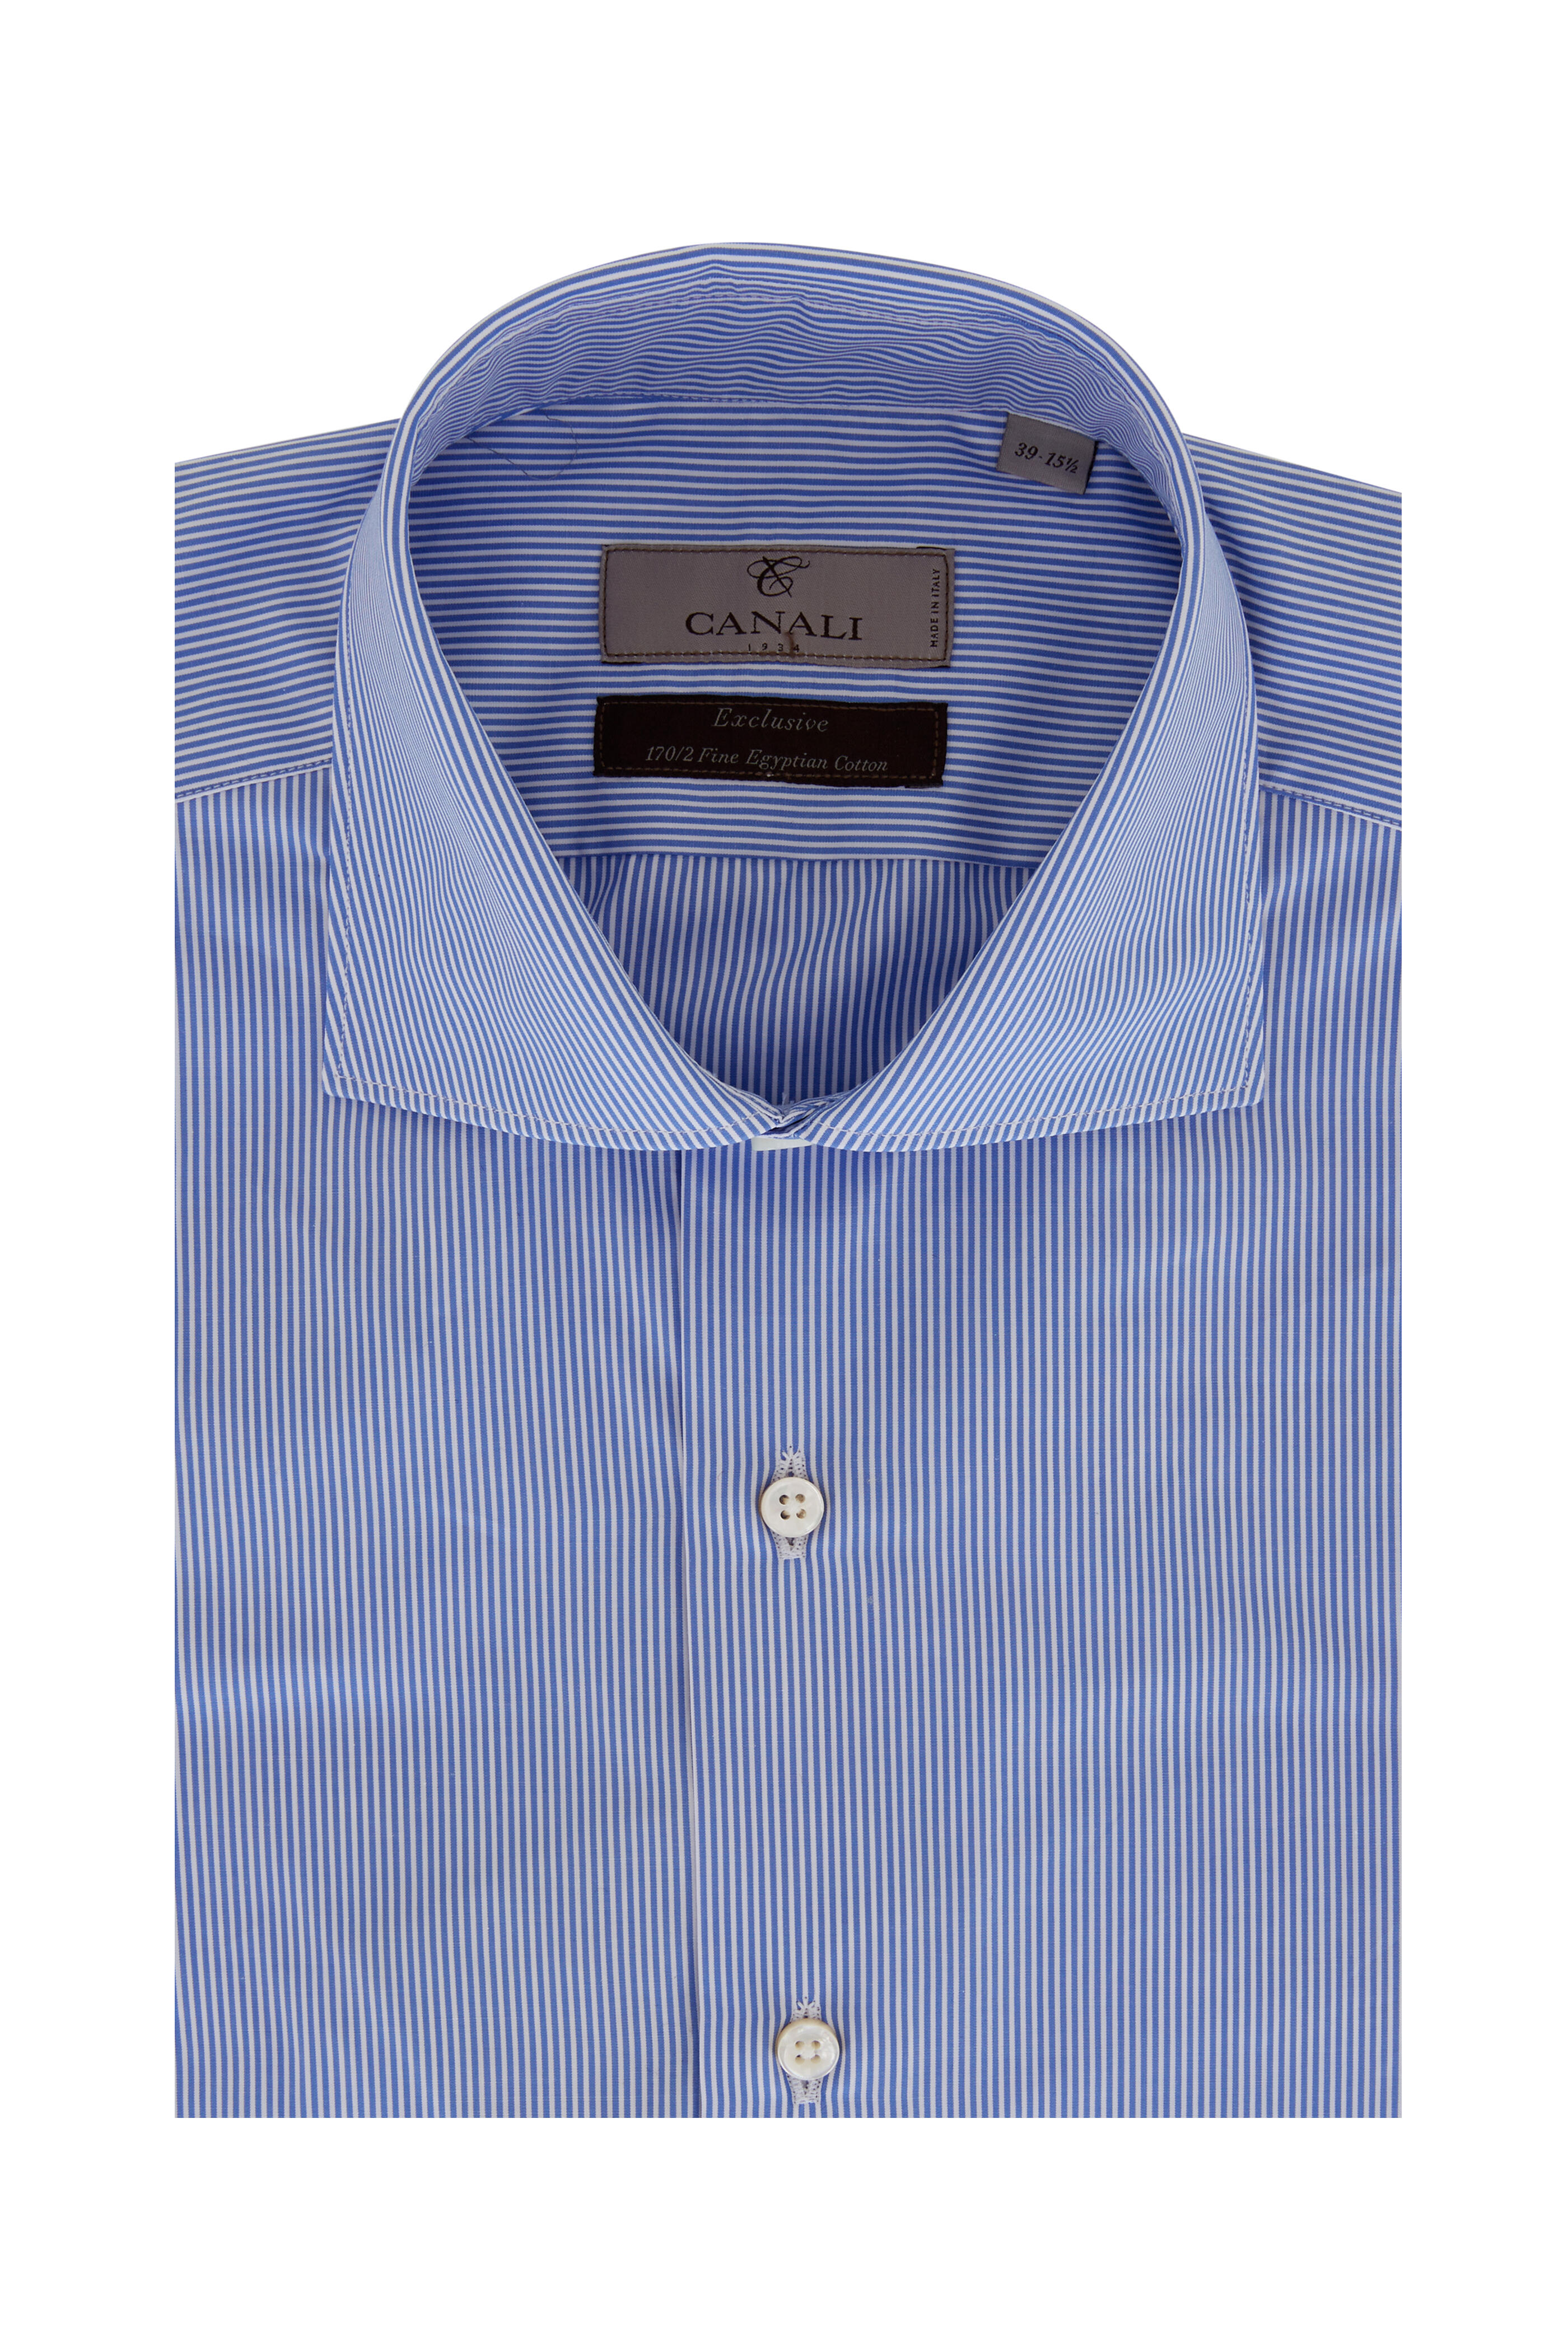 Canali - Blue Bengal Stripe Cotton Dress Shirt | Mitchell Stores